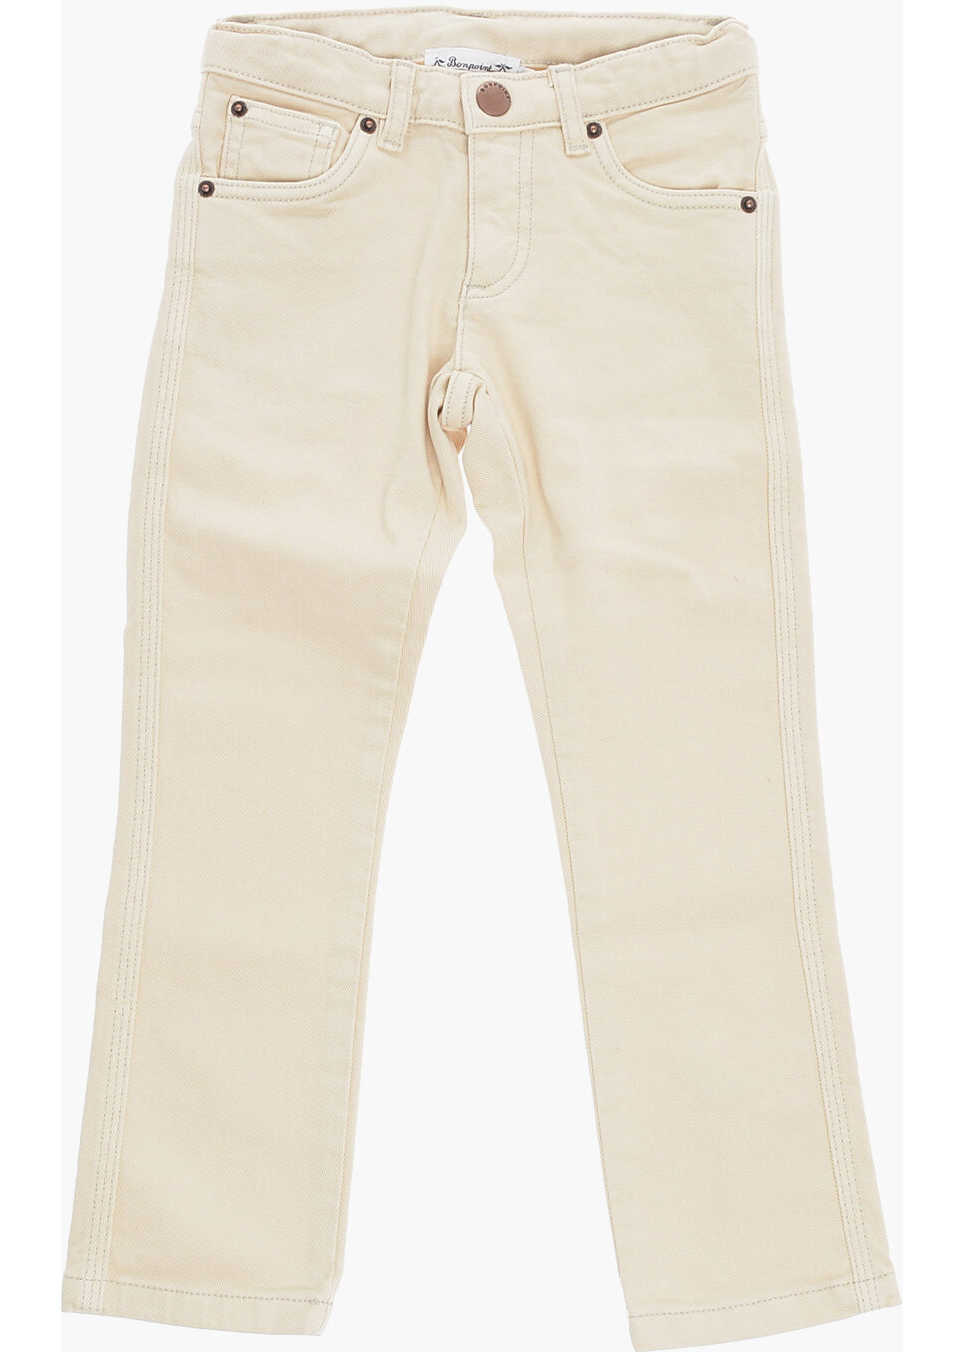 Bonpoint Solid Color Stretch Denim Jeans Beige